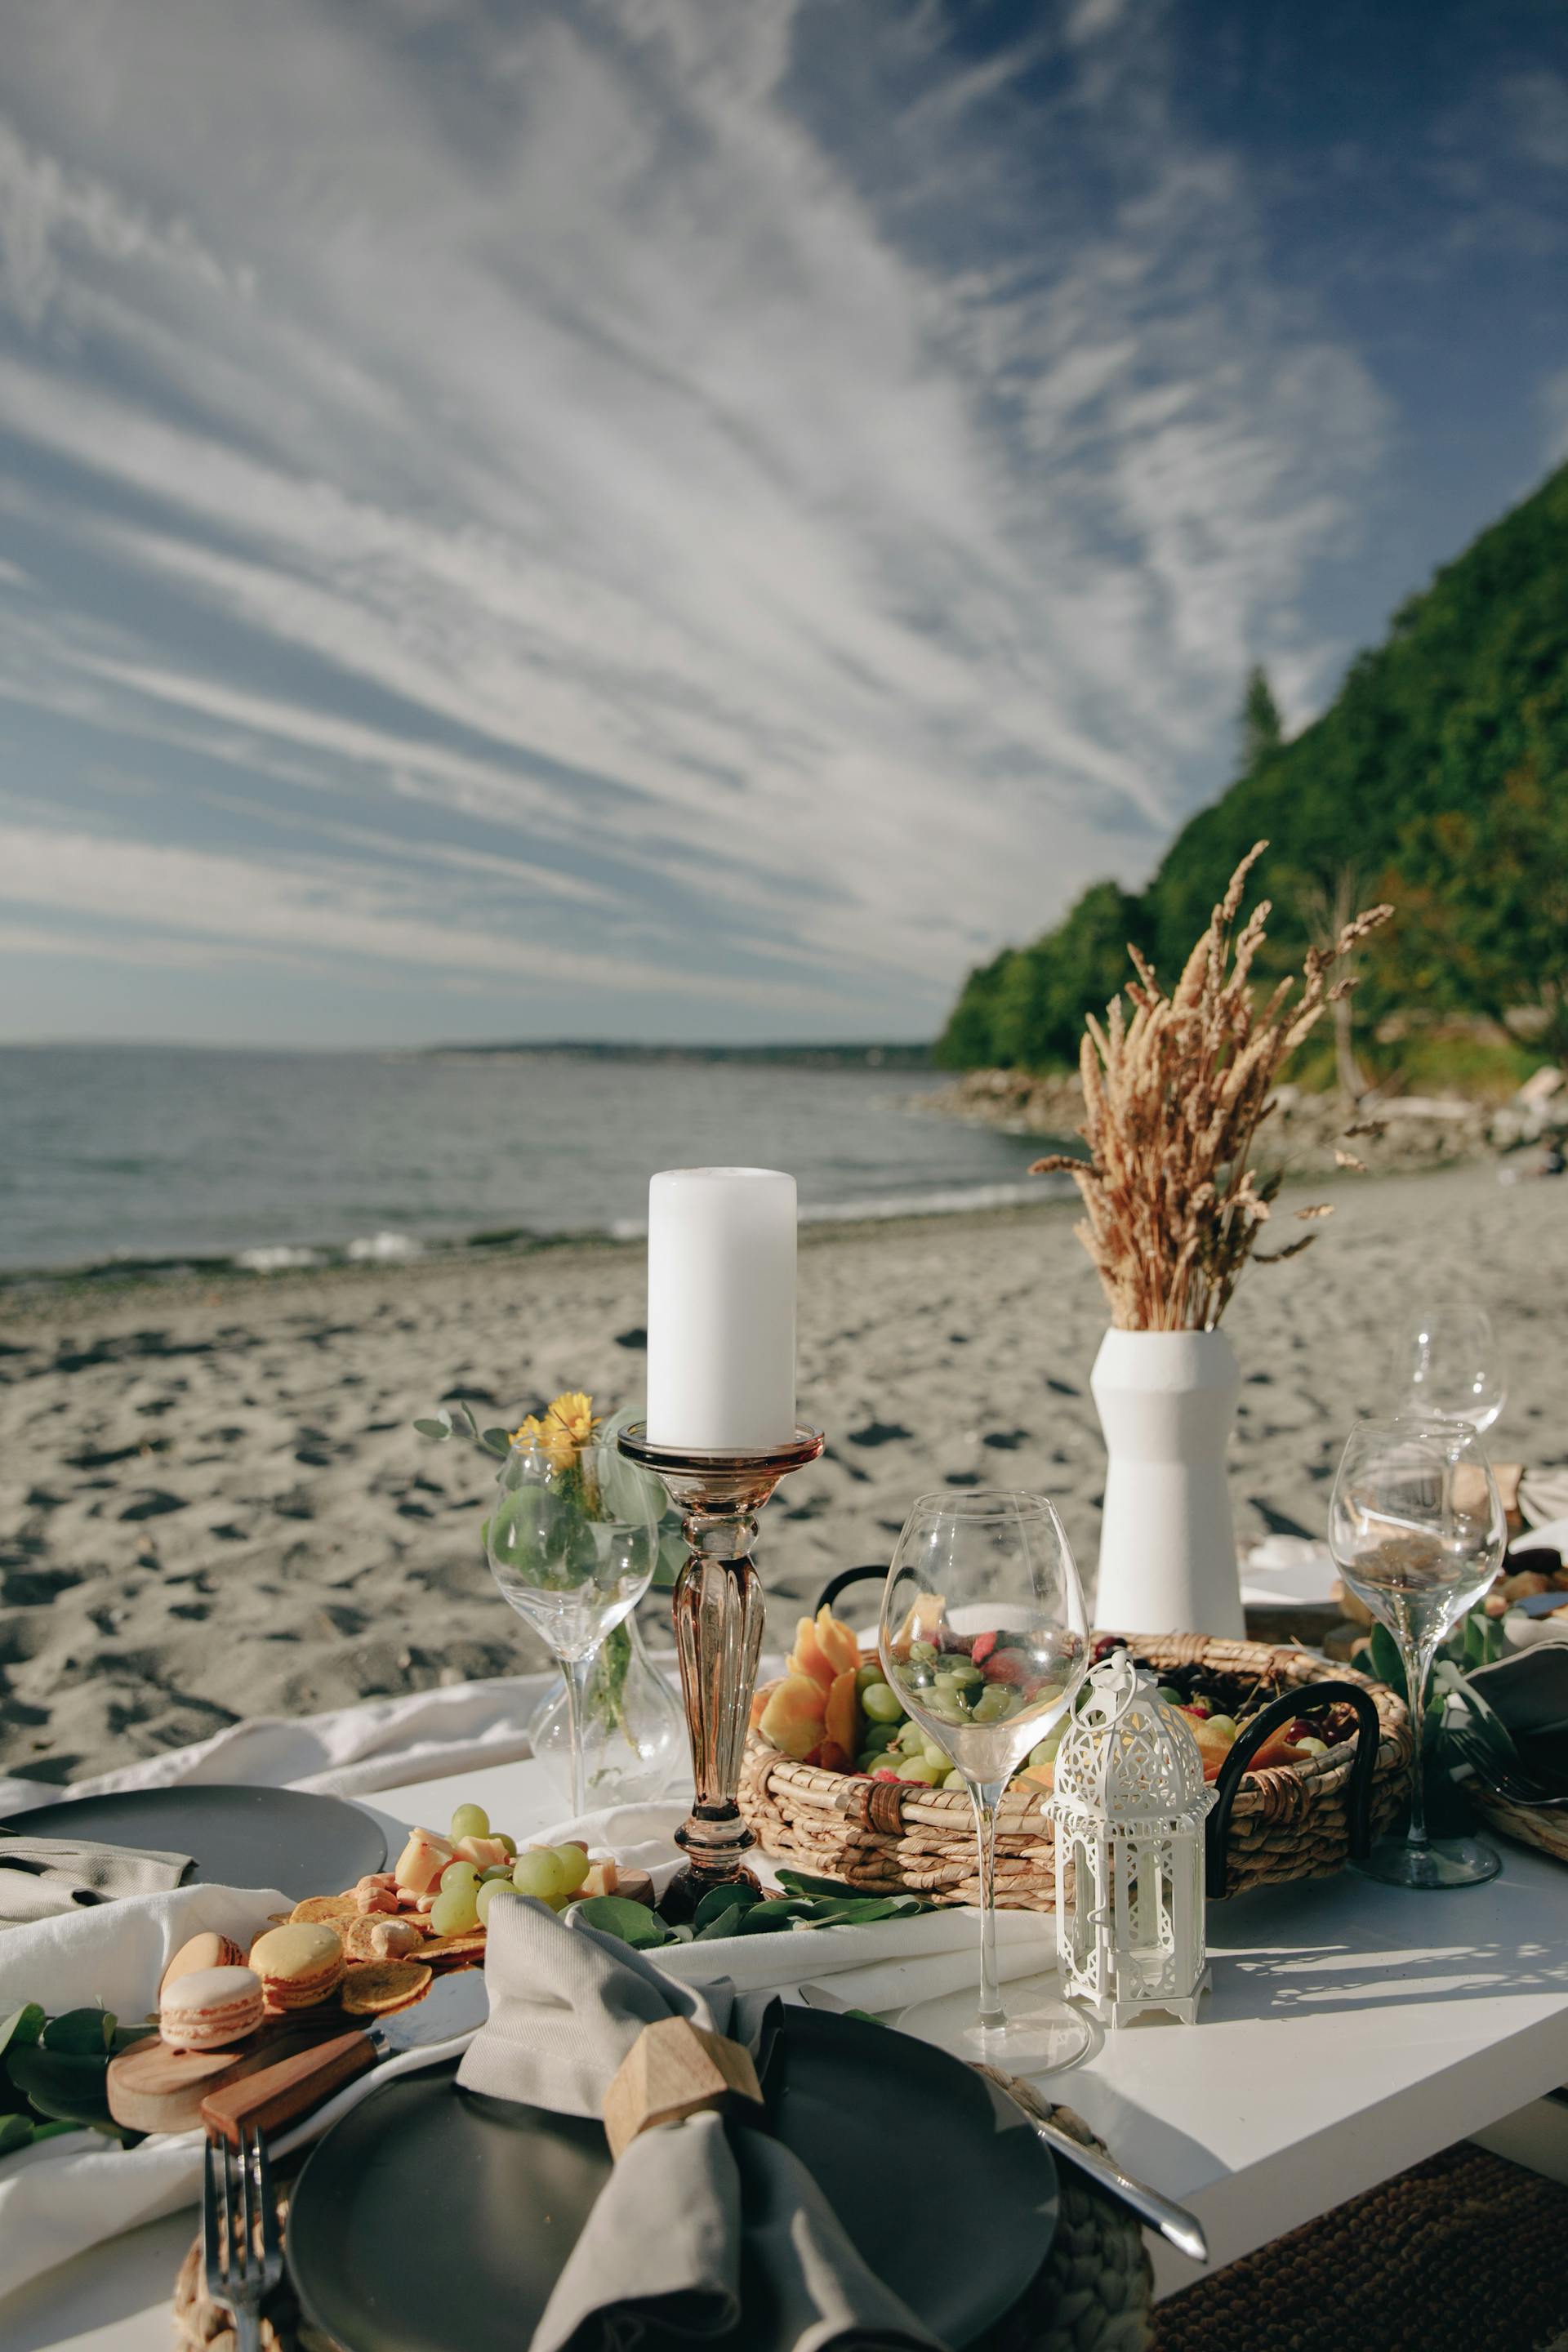 Dinner on the beach | Source: Pexels